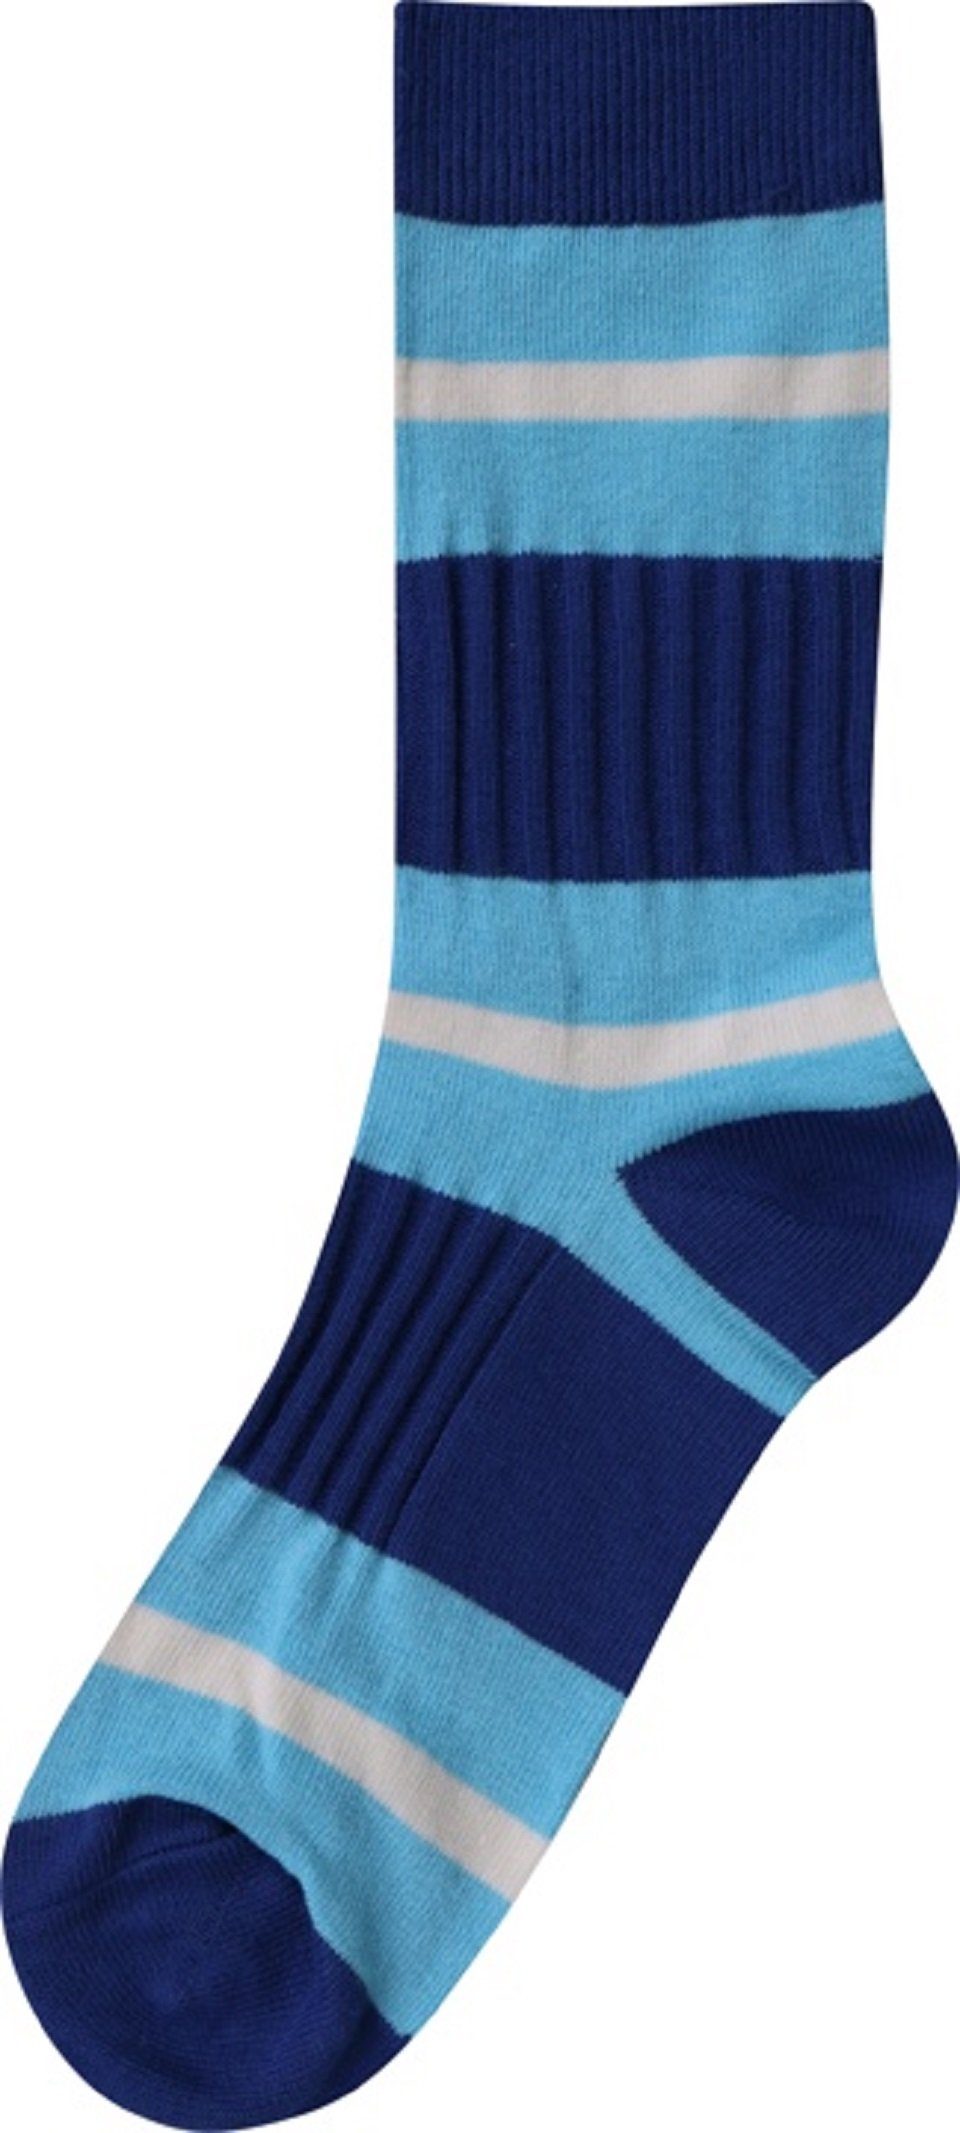 Capelli Socken Socken 2x Unisex blau York New